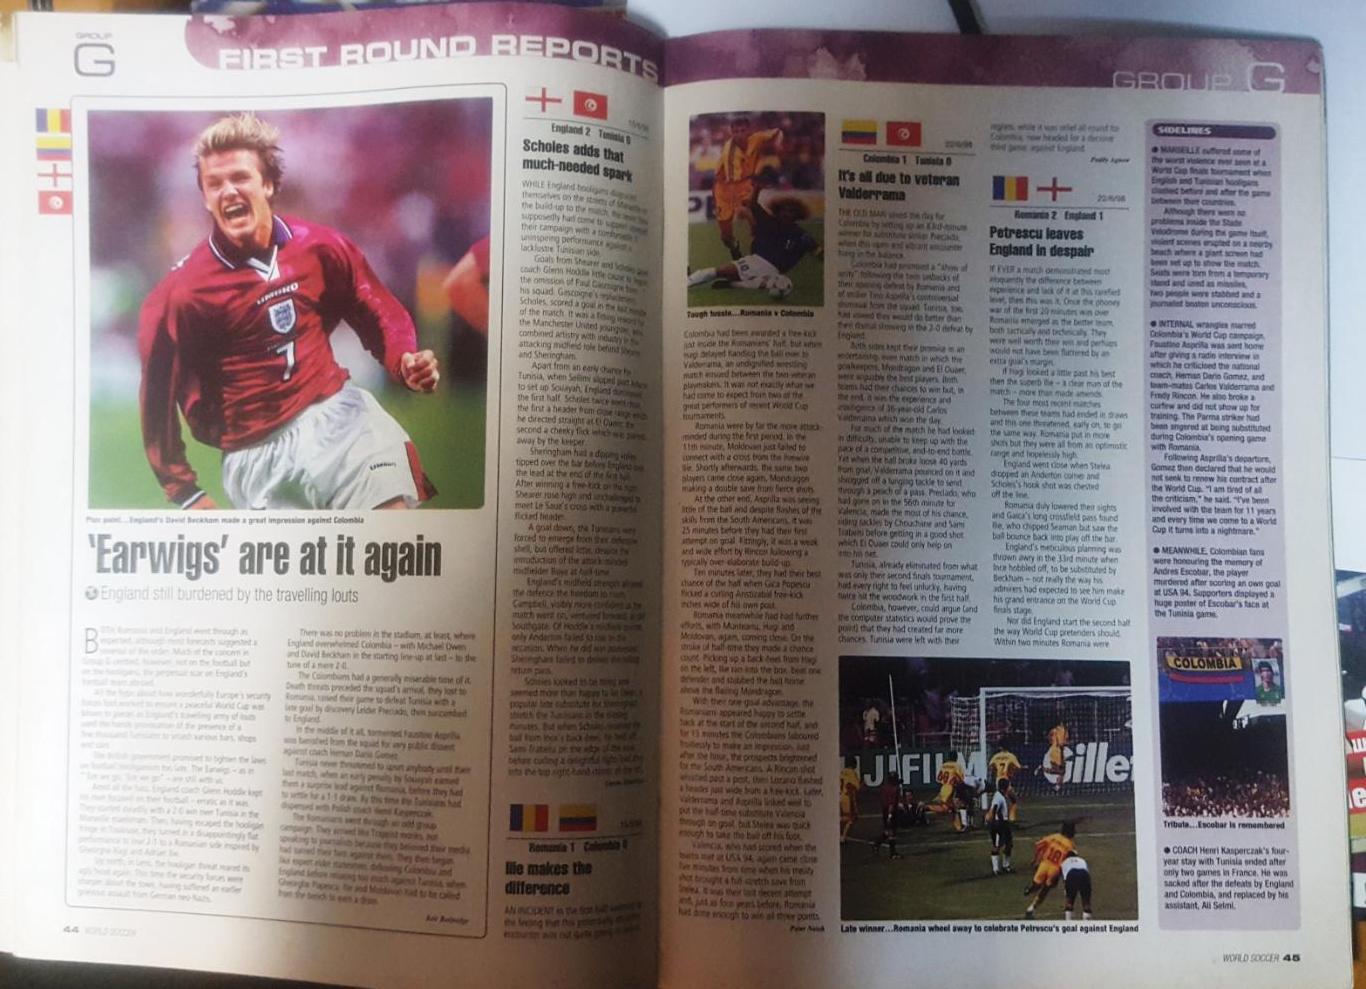 World Soccer август (august) 1998 3